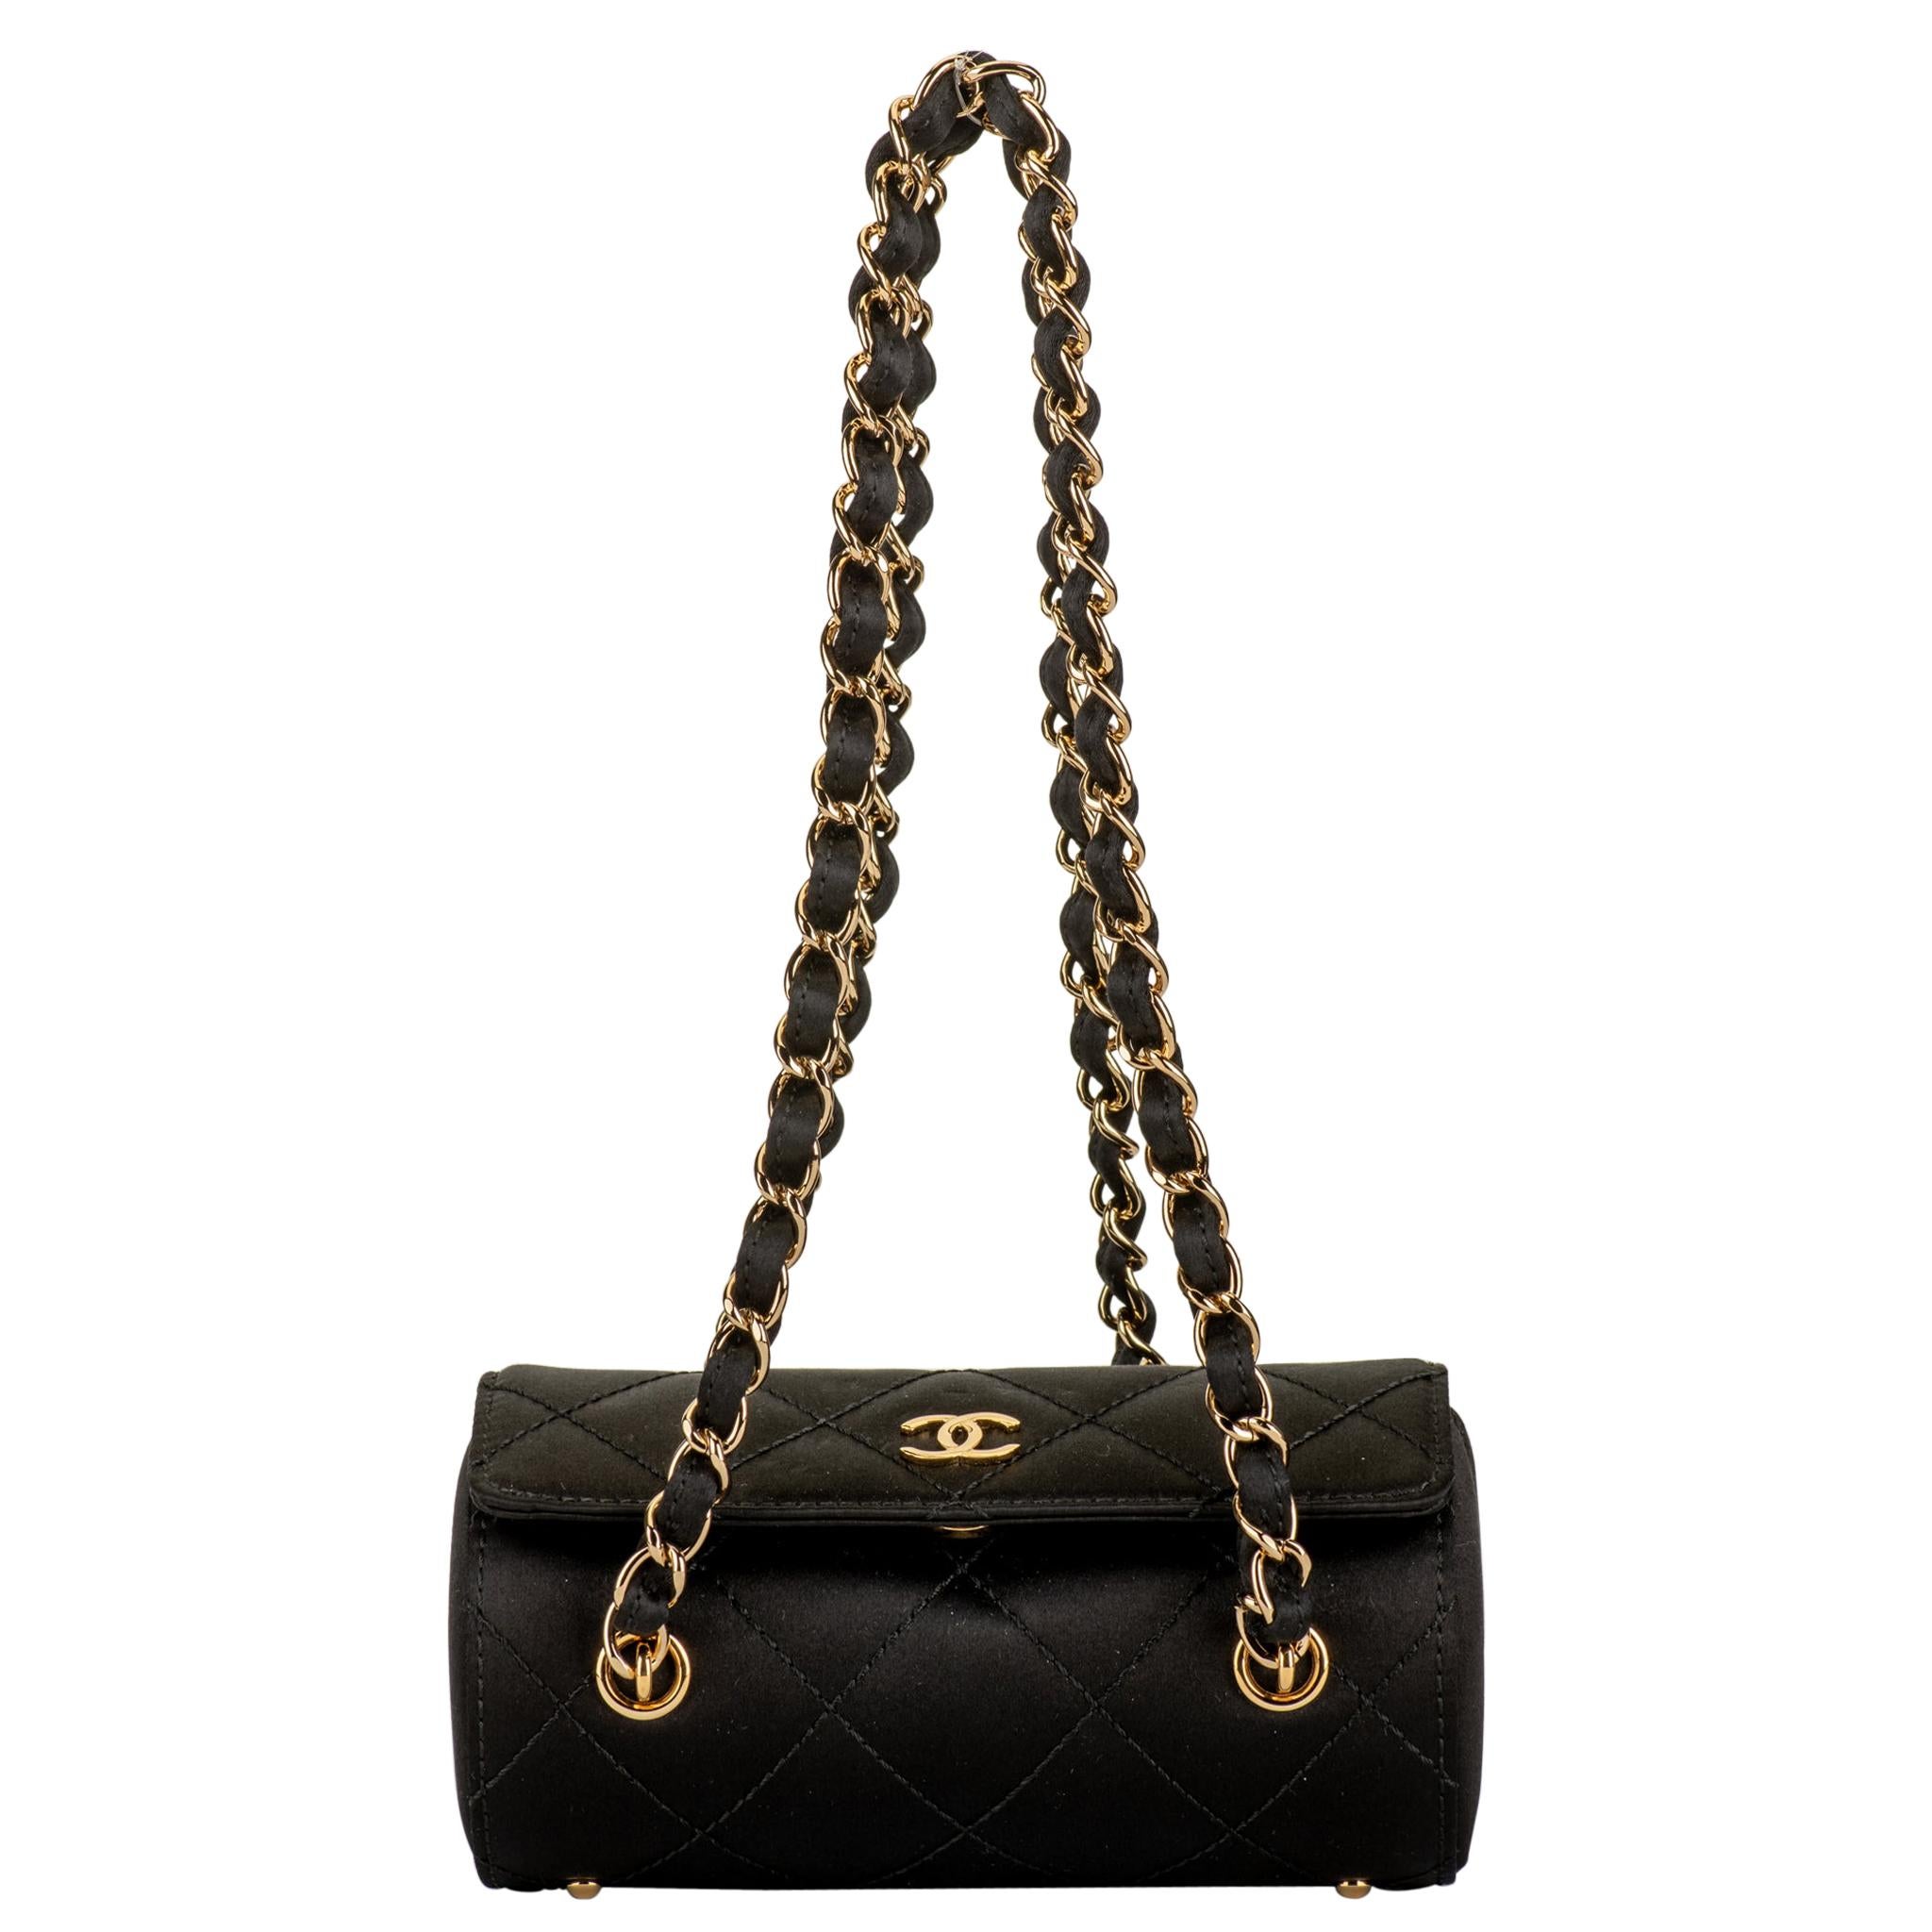 Rare New in box Chanel Silk Barrel Evening Bag